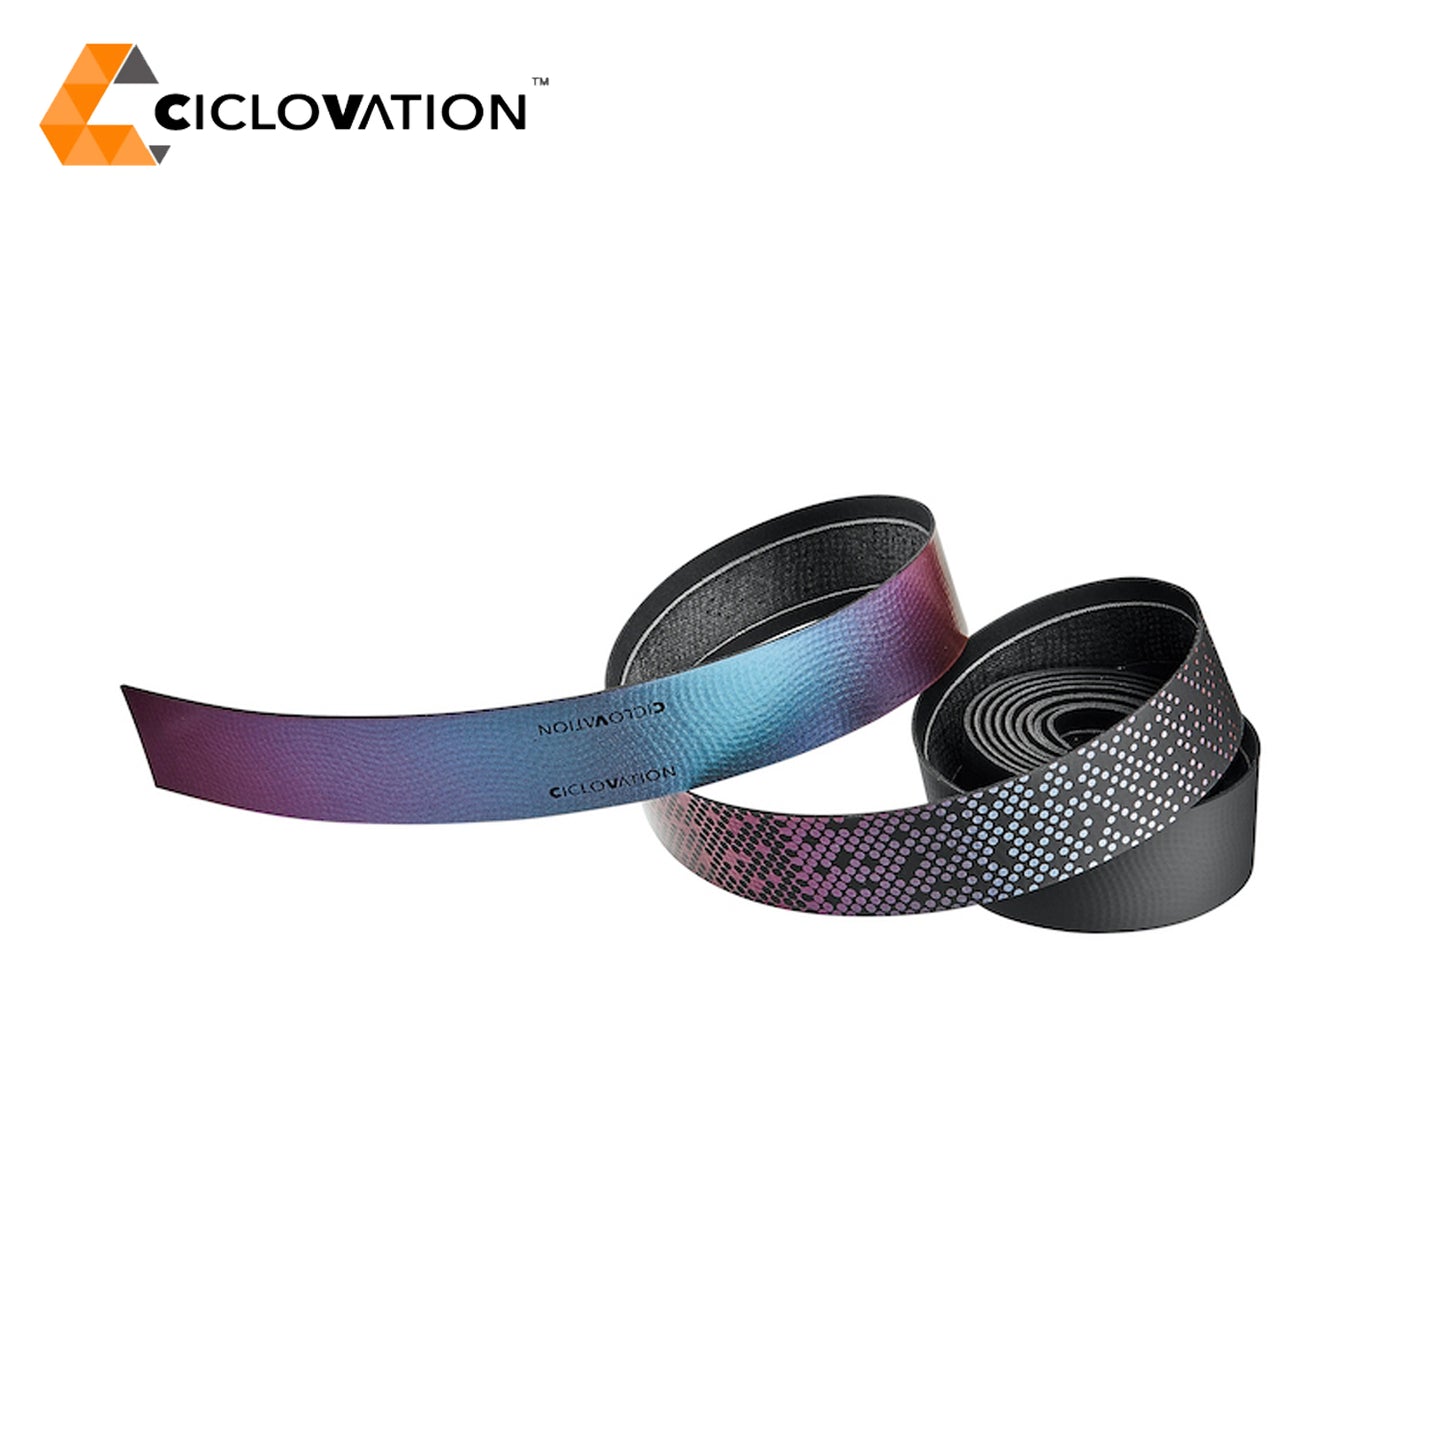 Ciclovation Premium Leather Touch Chameleon Bar Tape - Violet Purple